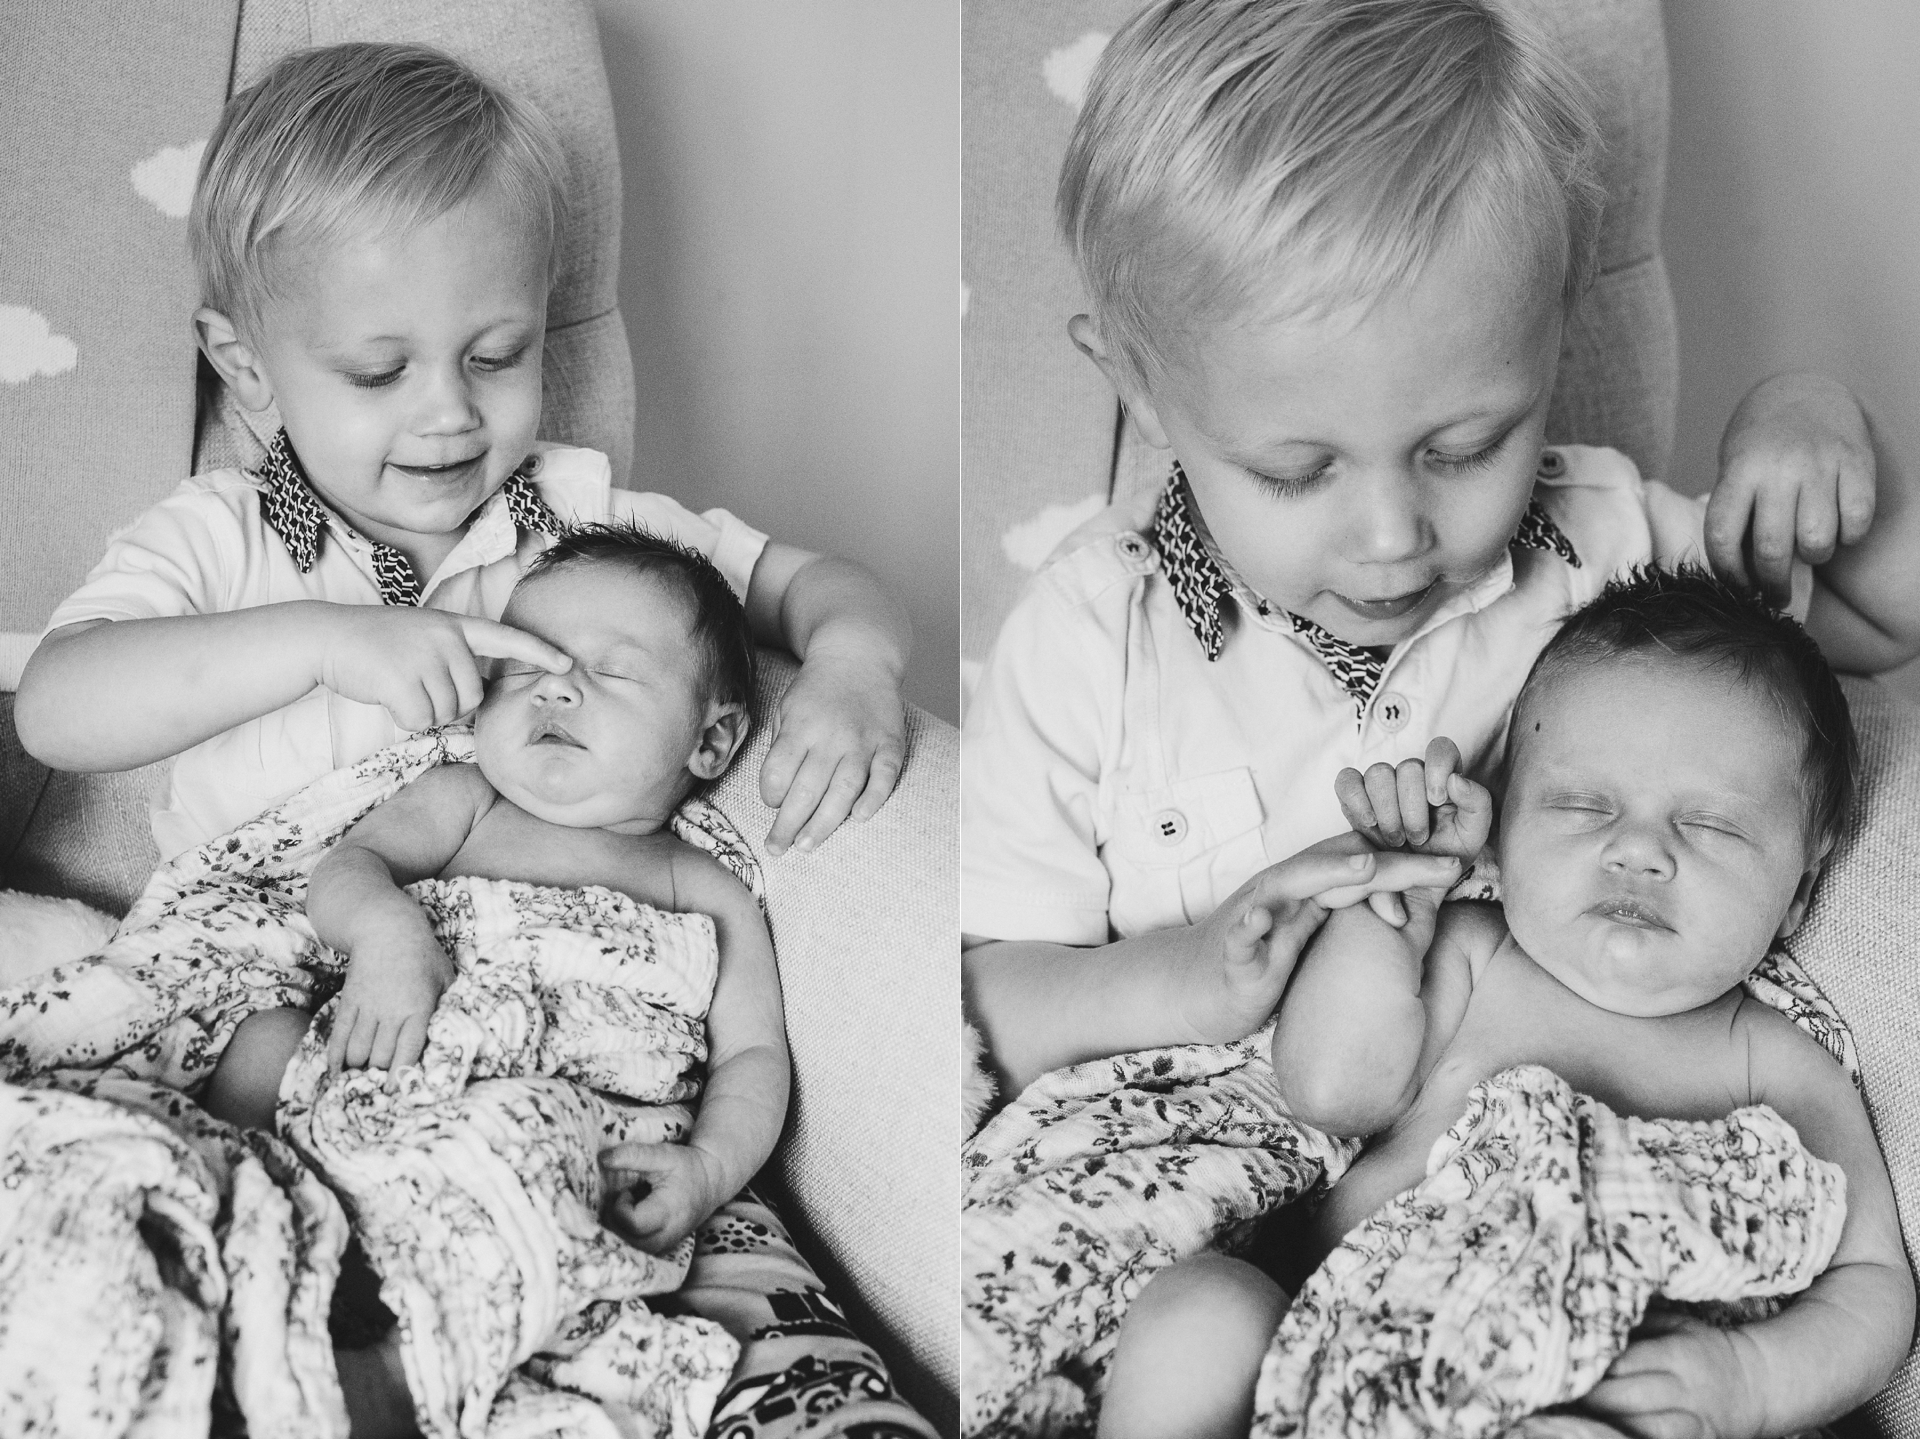 A young boy carefully cuddling his newborn sister